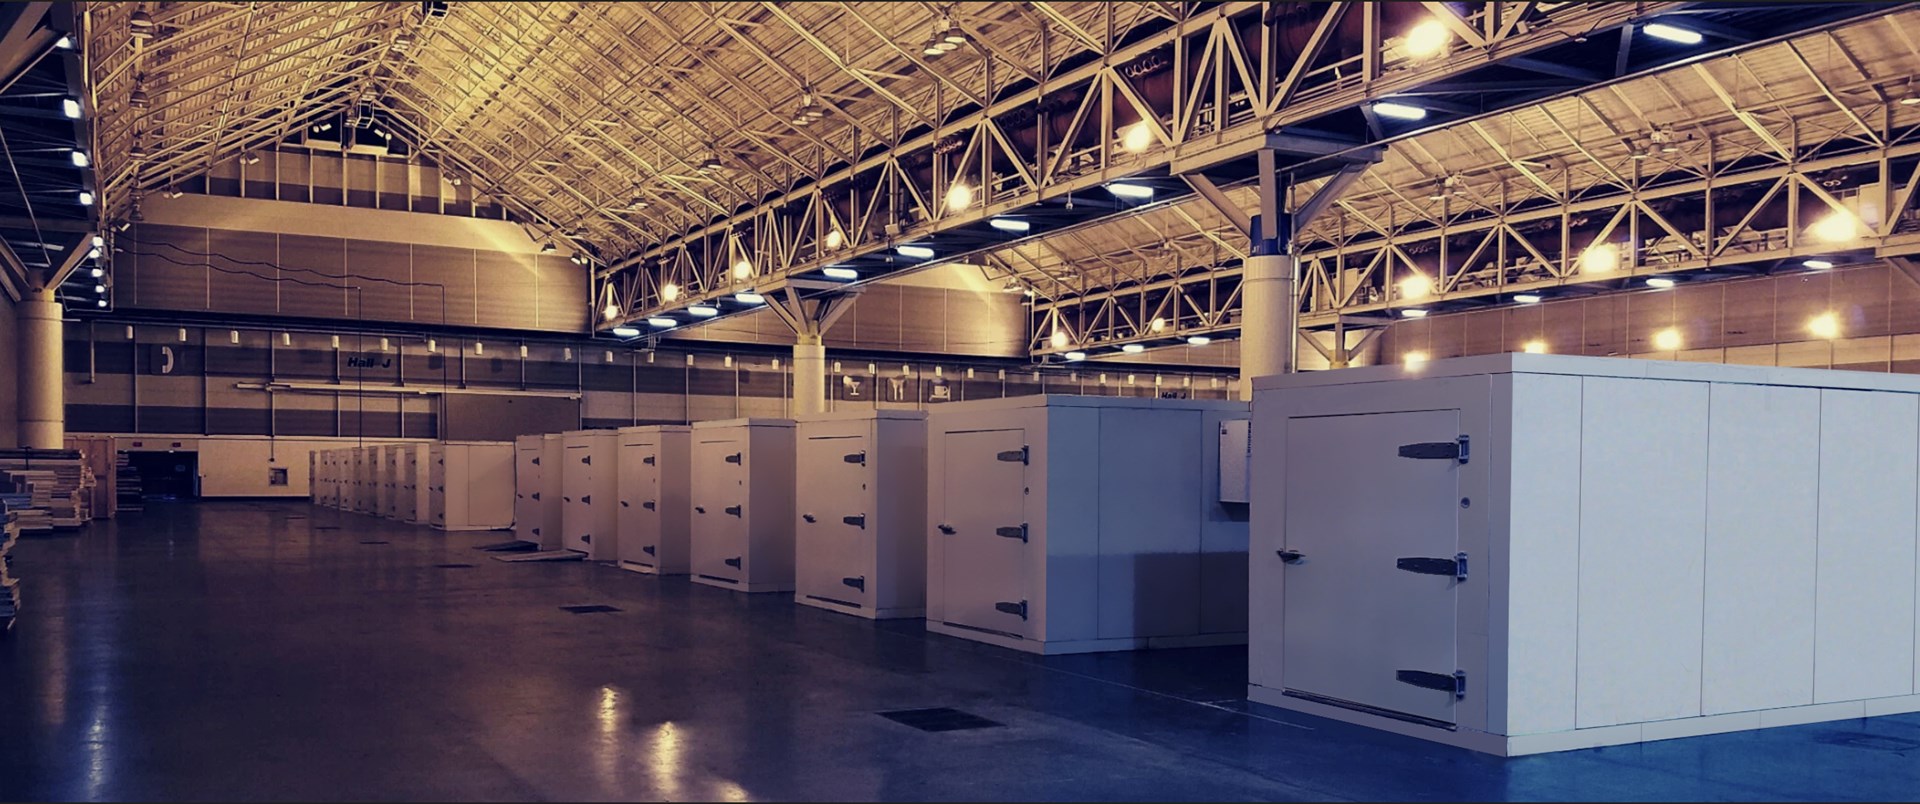 Commercial Refrigeration, Storage Refrigeration & Modular Cold Rooms